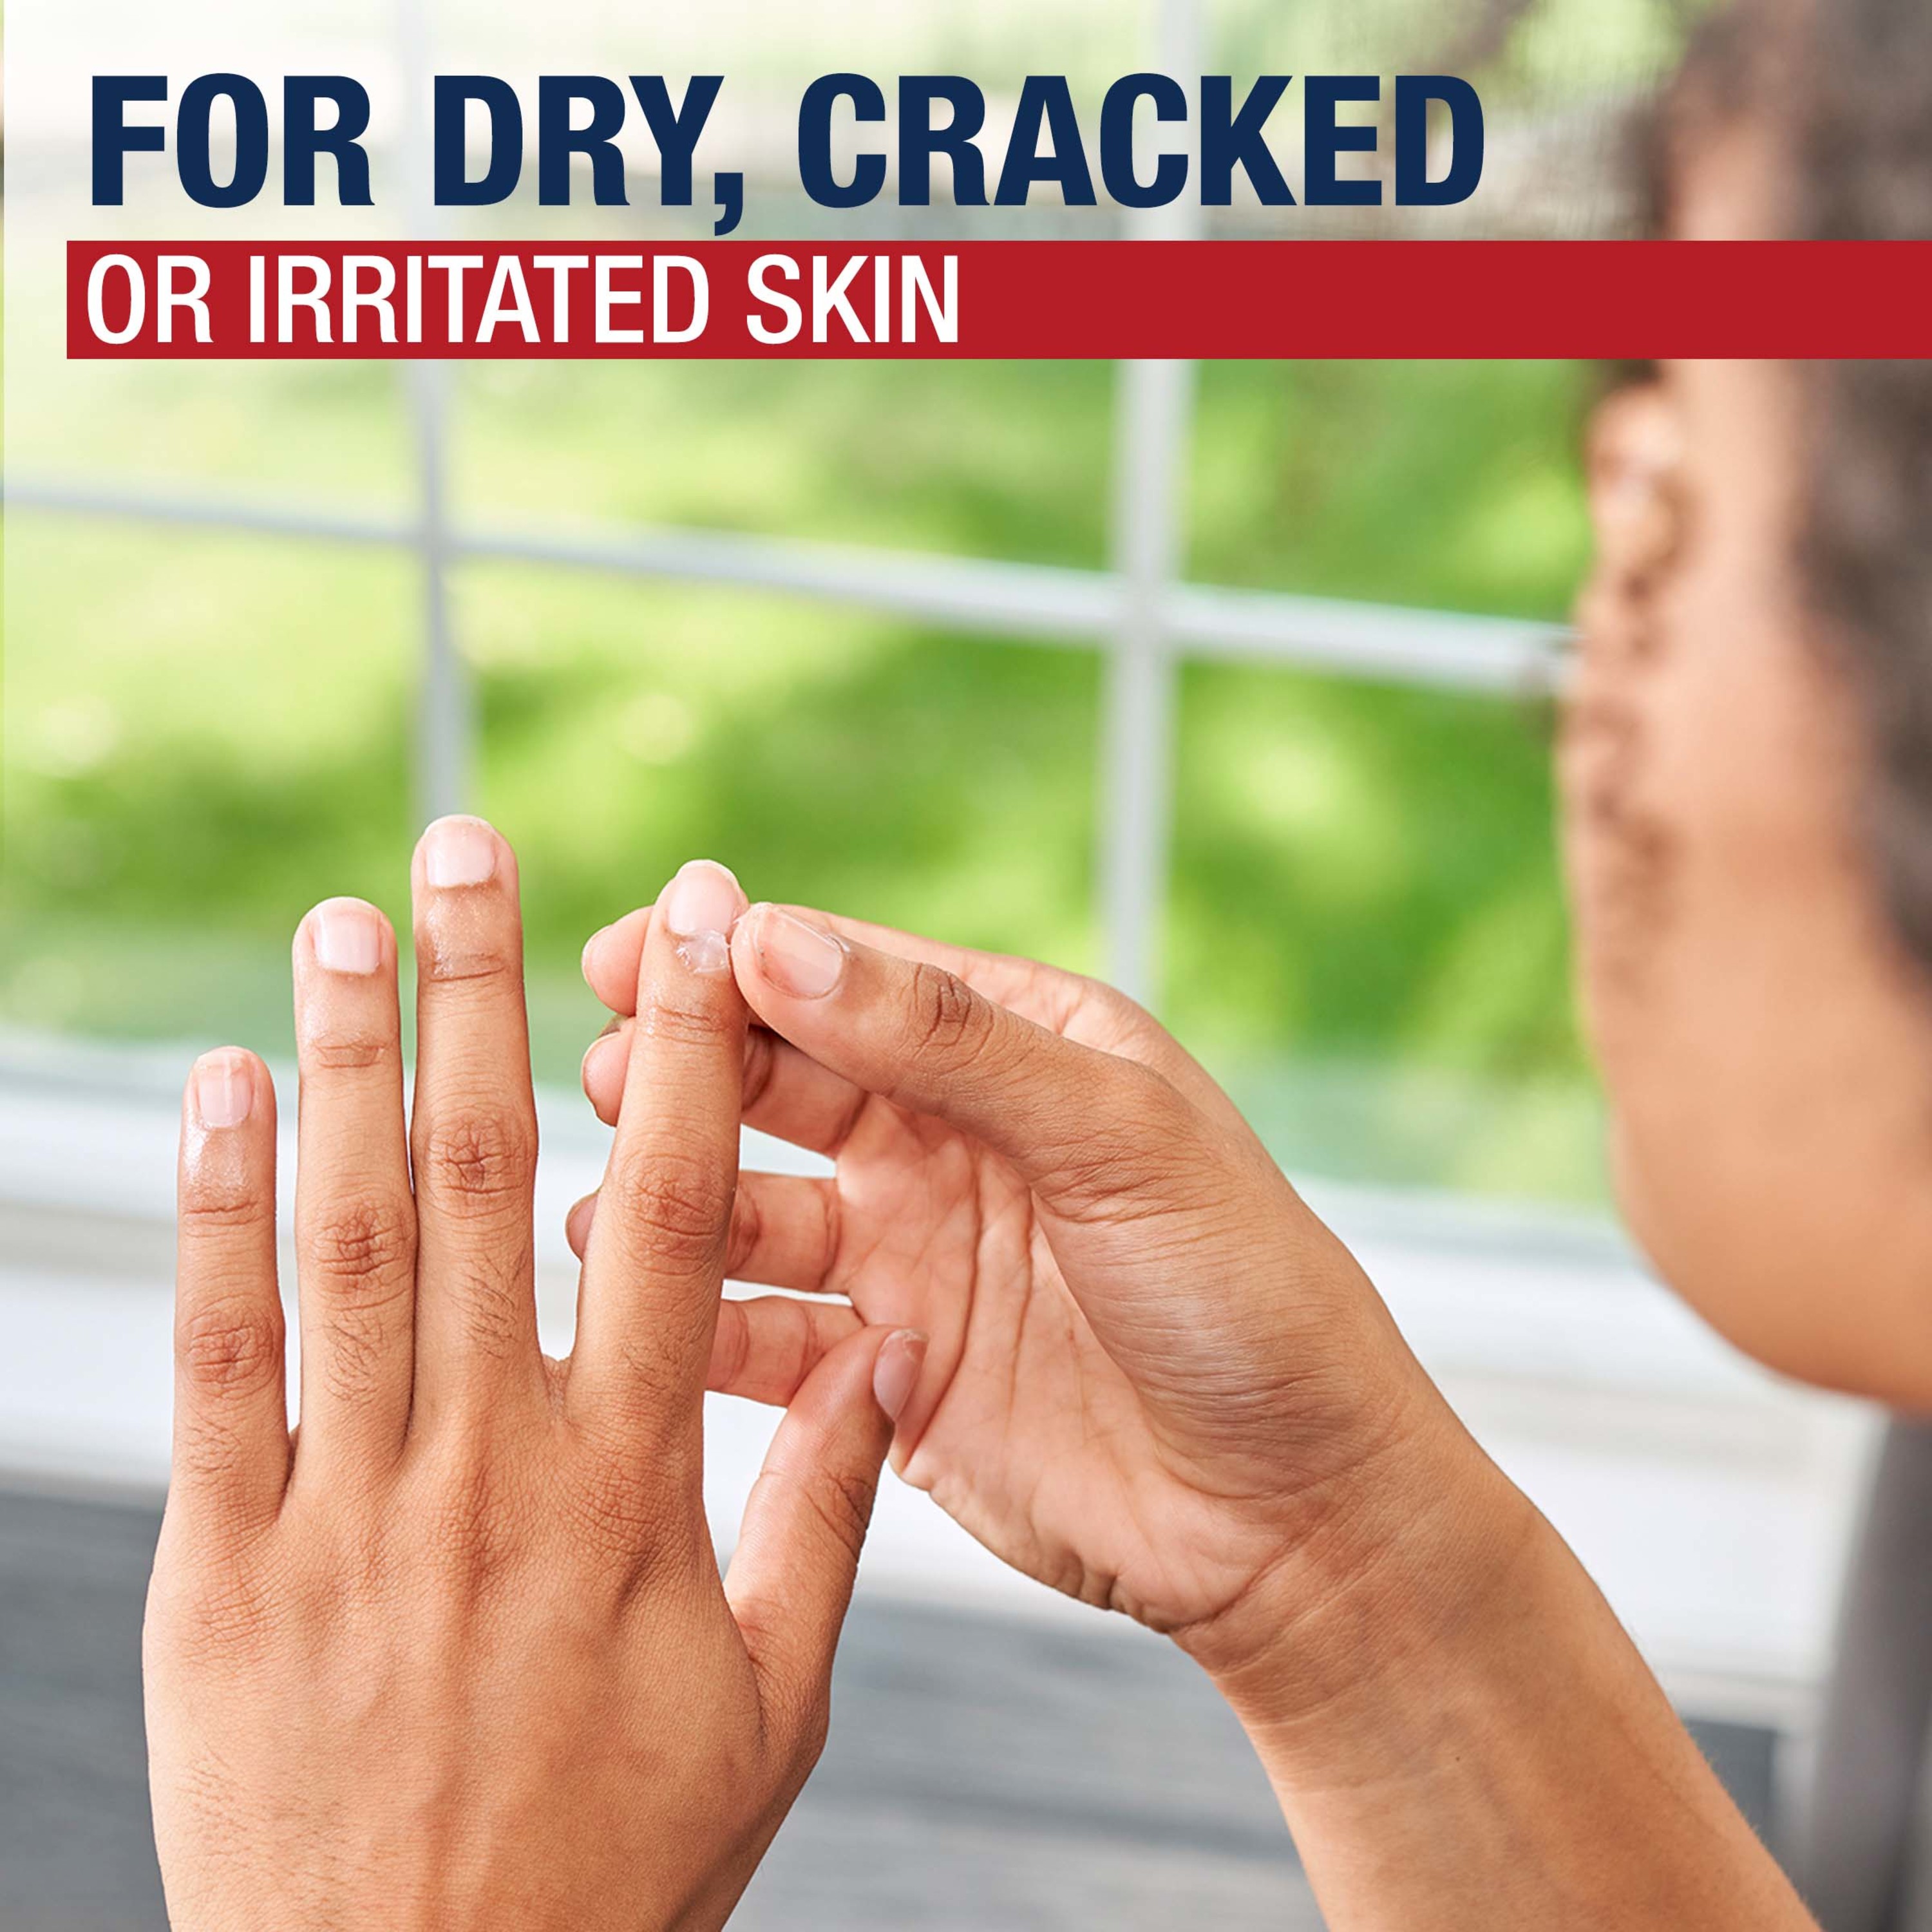 Aquaphor Healing Ointment Skin Protectant, Use After Hand Washing, 1.75 oz. Tube - image 5 of 17